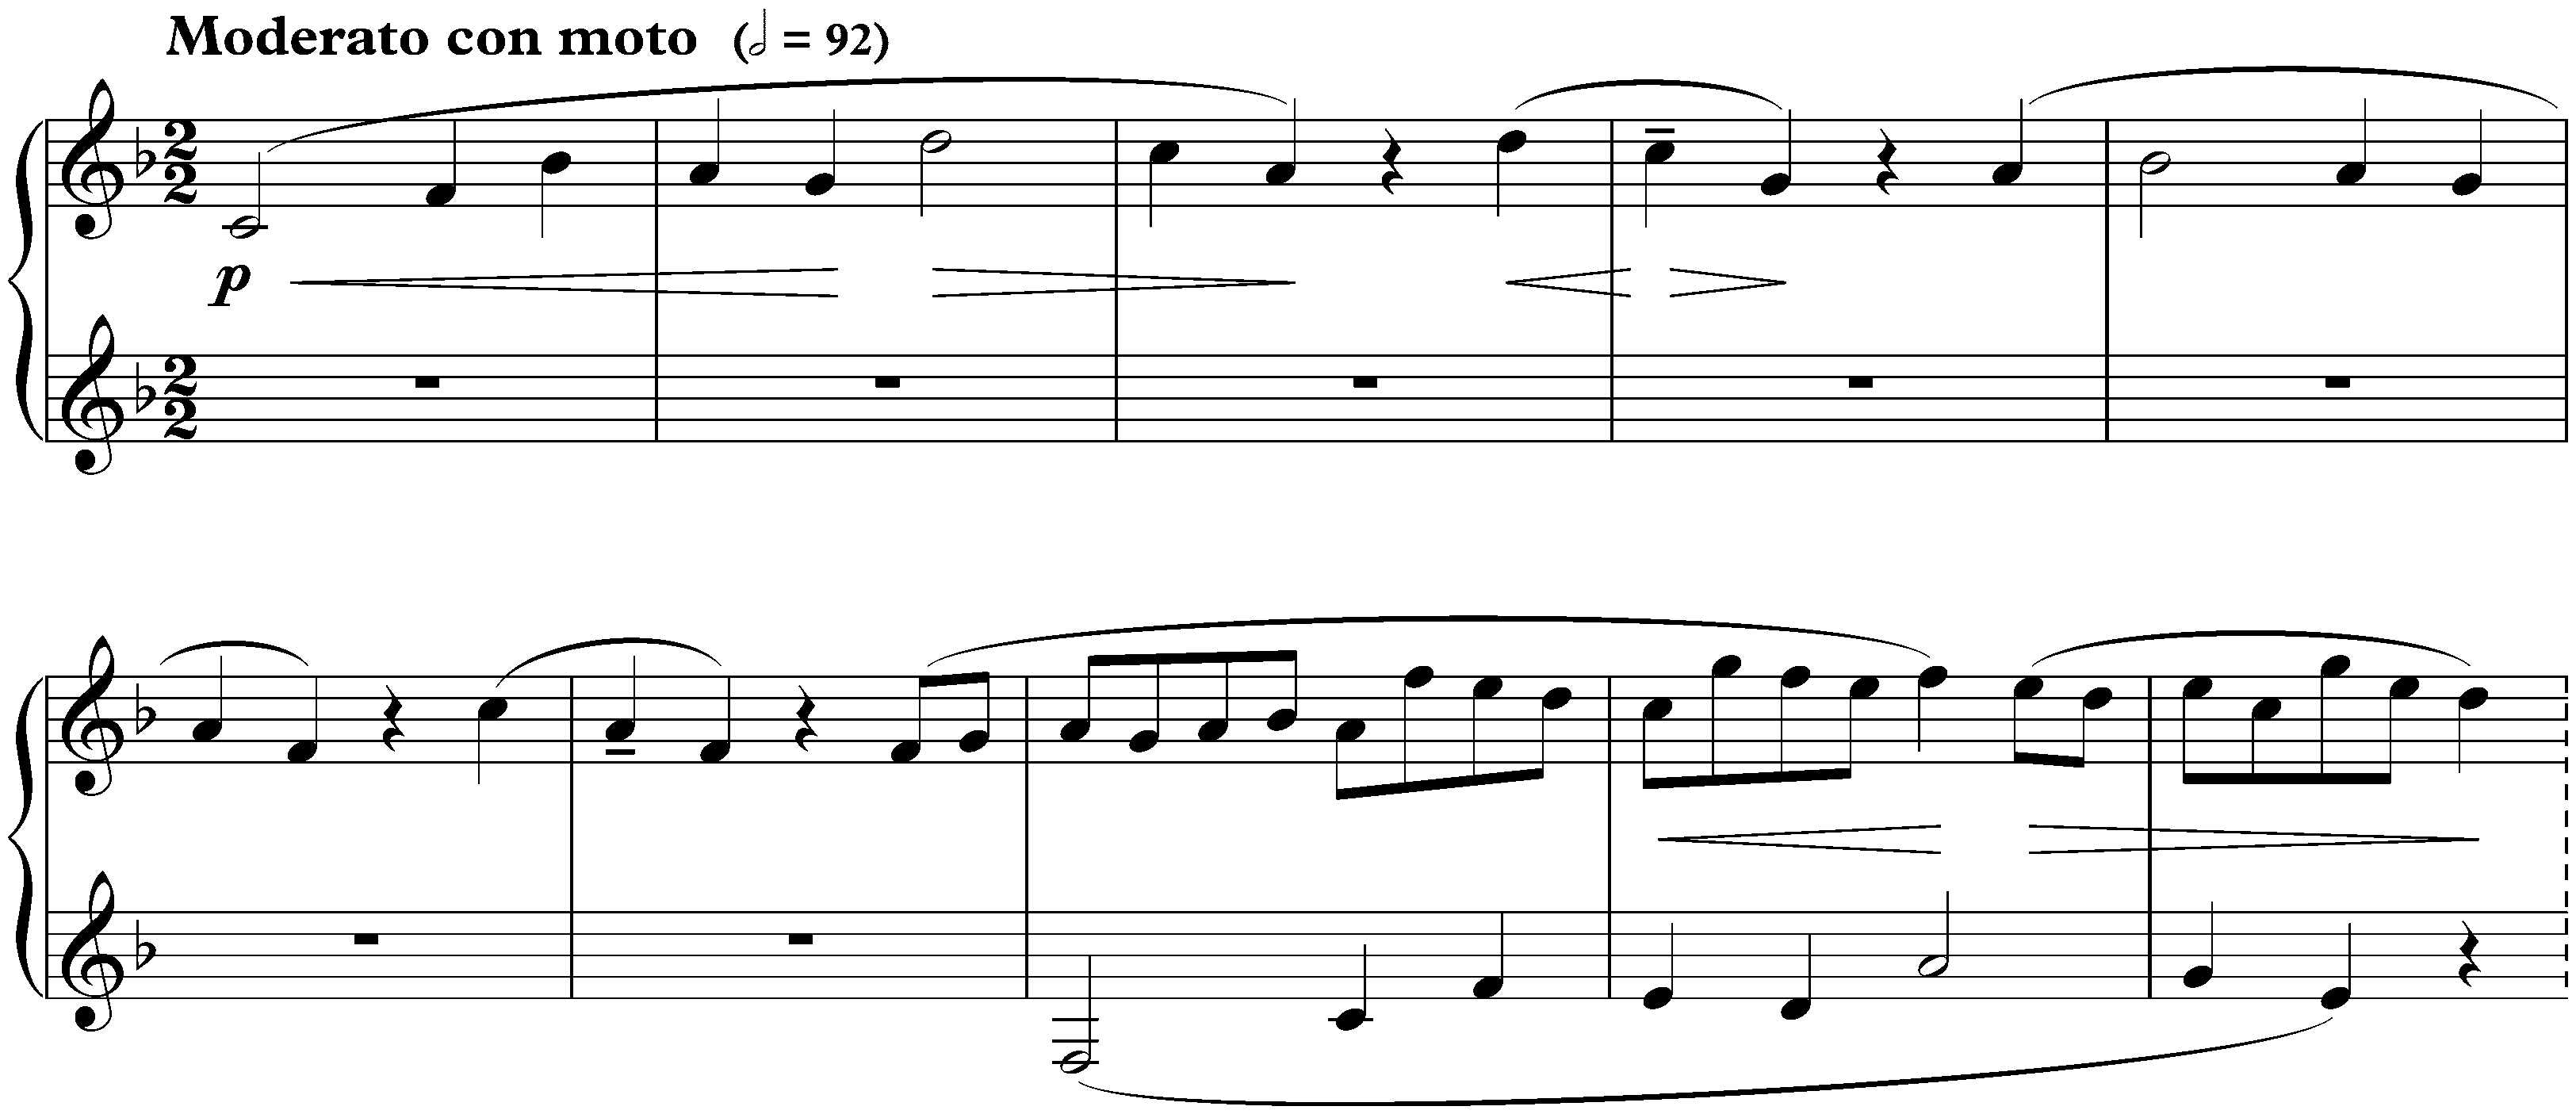 Twenty-four Preludes and Fugues, op. 87; 23. F major, Fugue